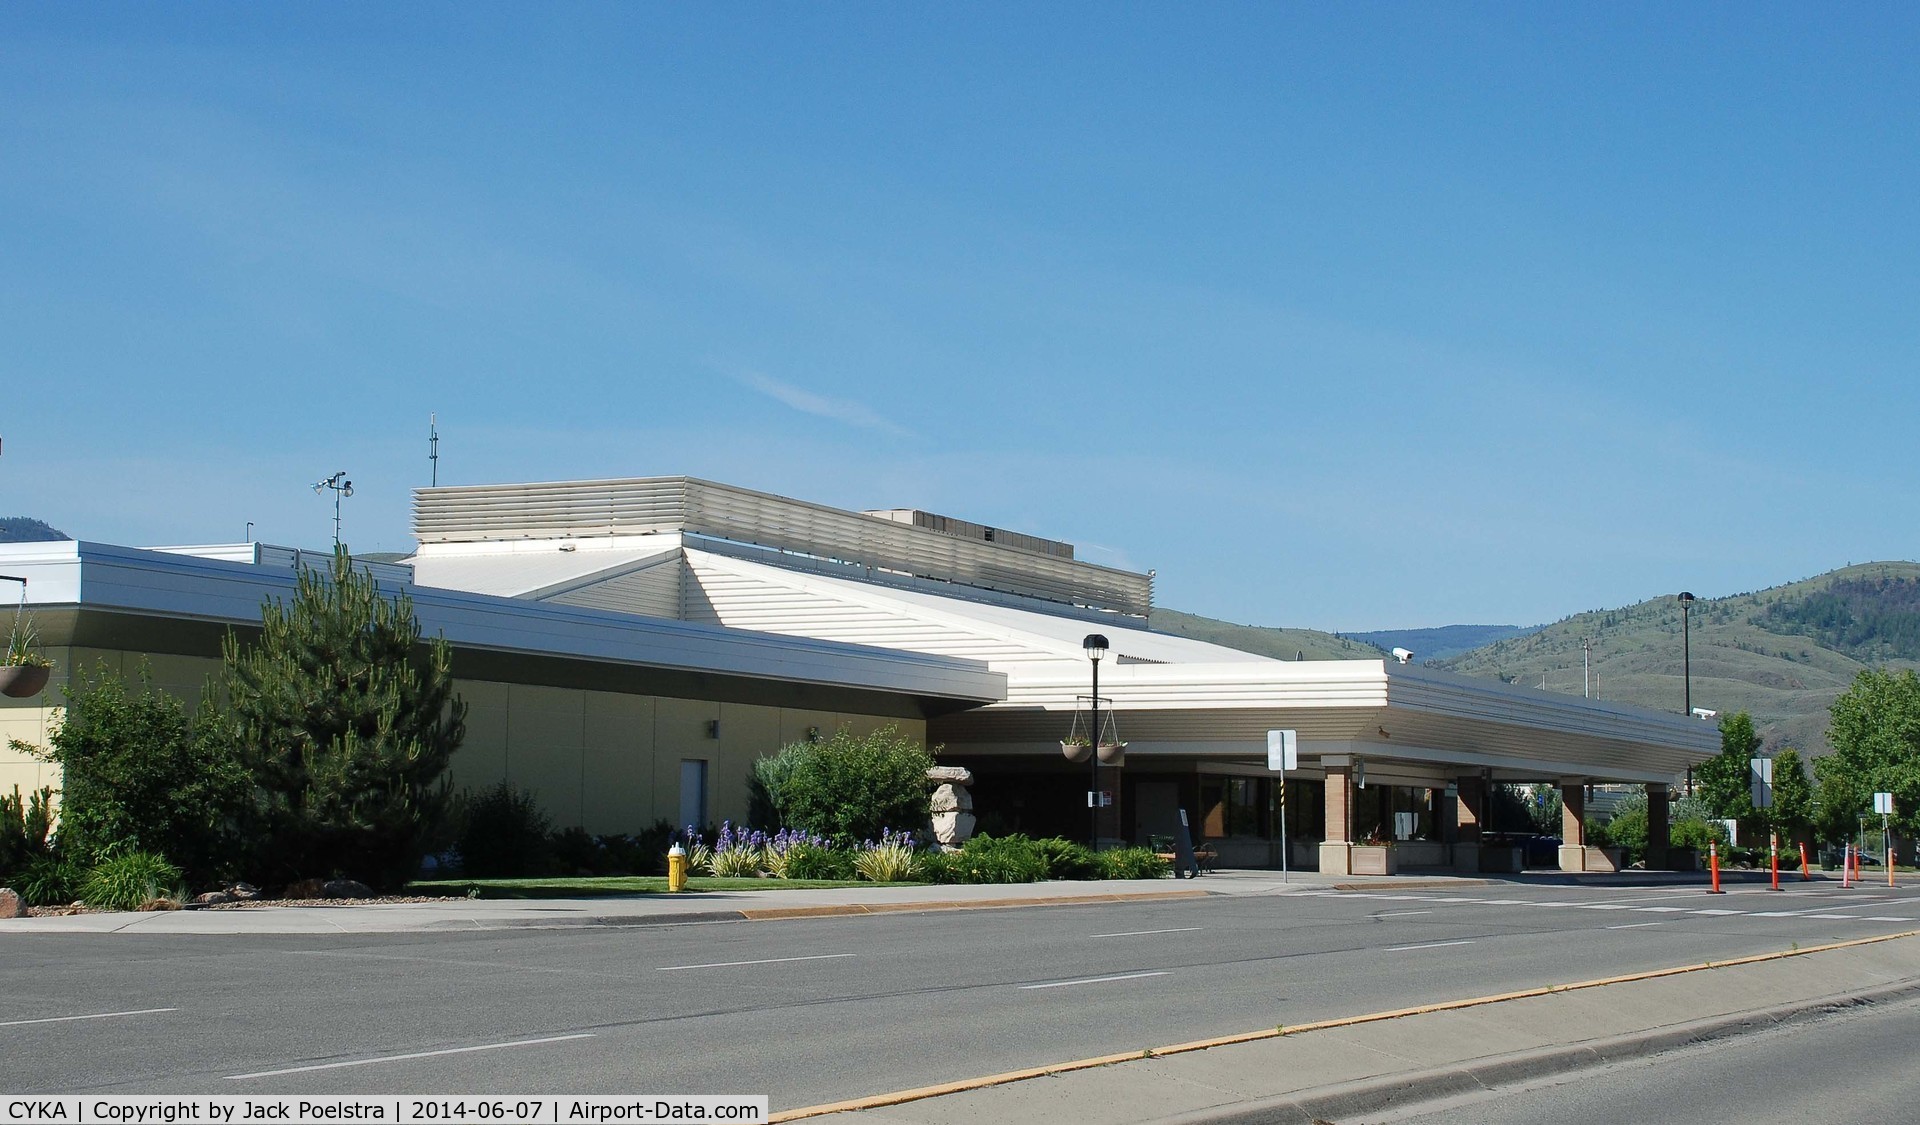 Kamloops Airport, Kamloops, British Columbia Canada (CYKA) - Terminal of Kamloops airport BC